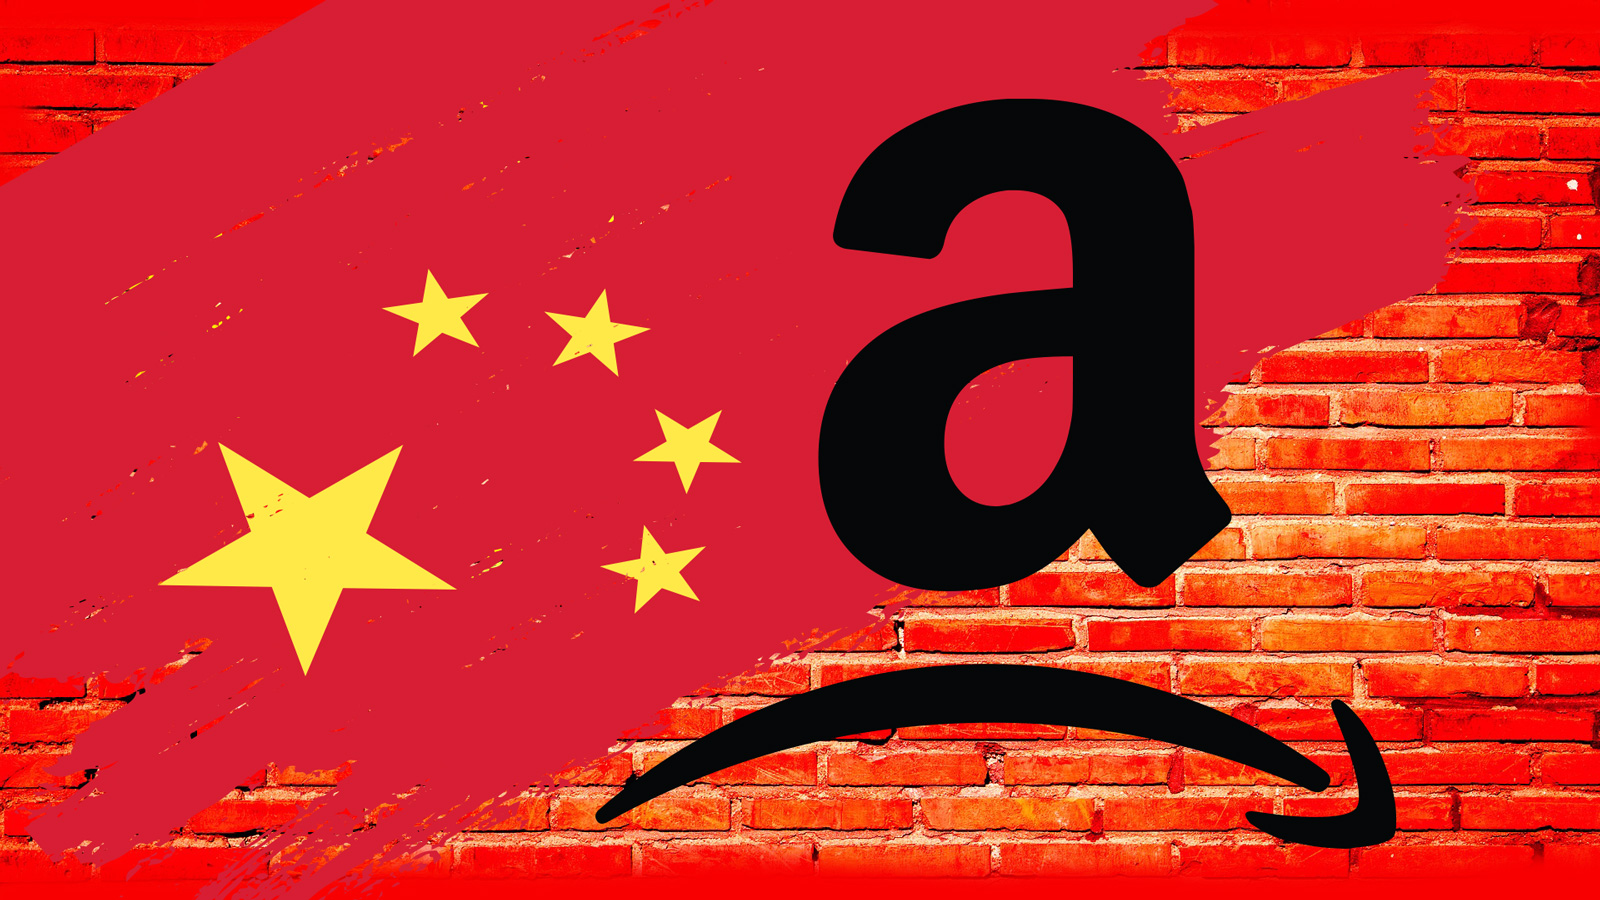 Amazon and China